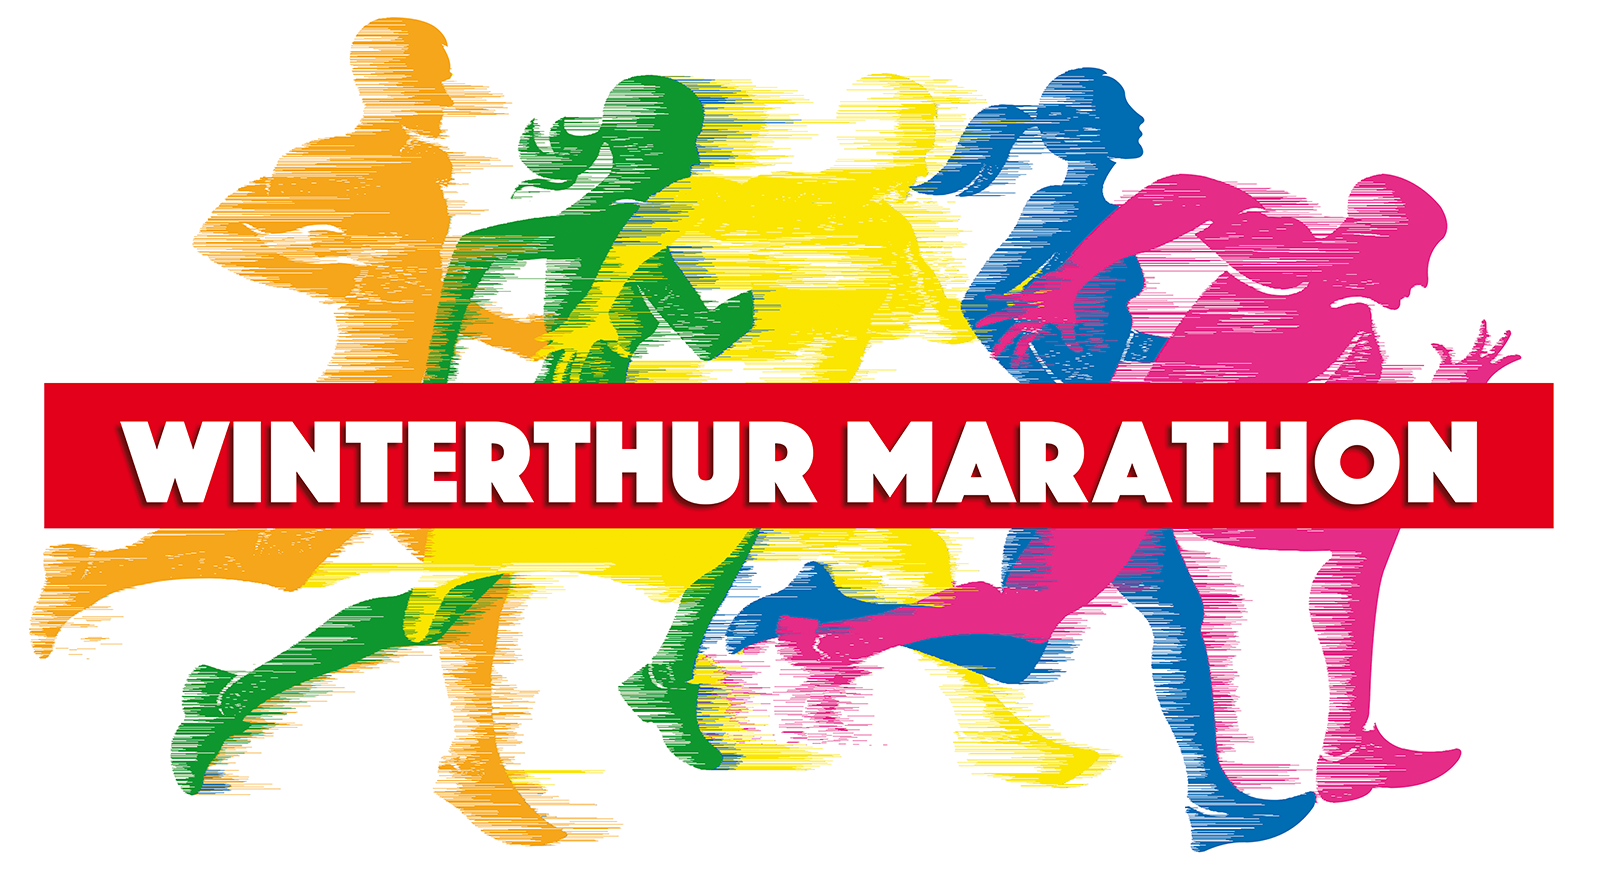 2. Winterthur Marathon Challenge